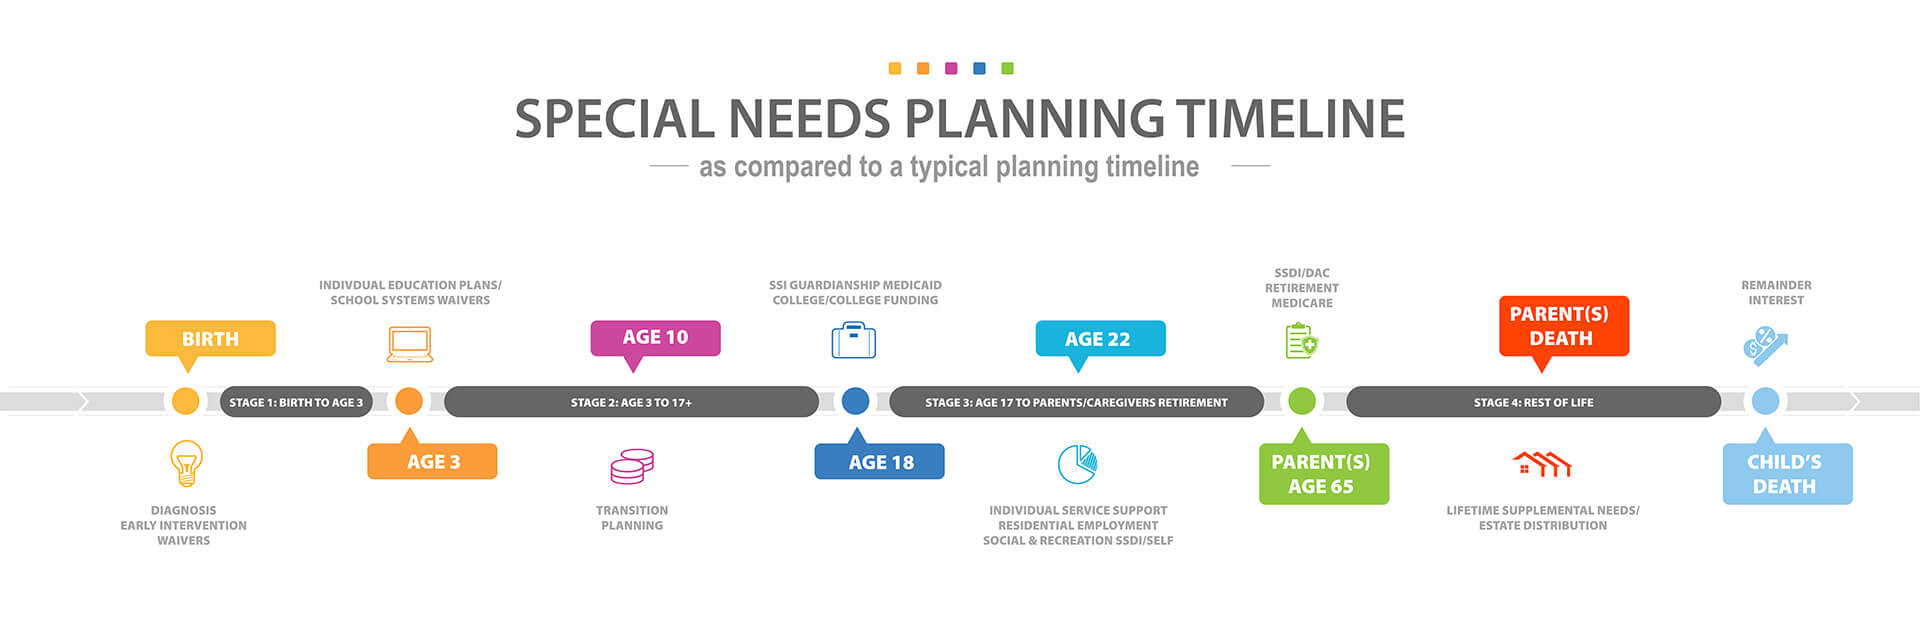 Special Needs Planning Timeline